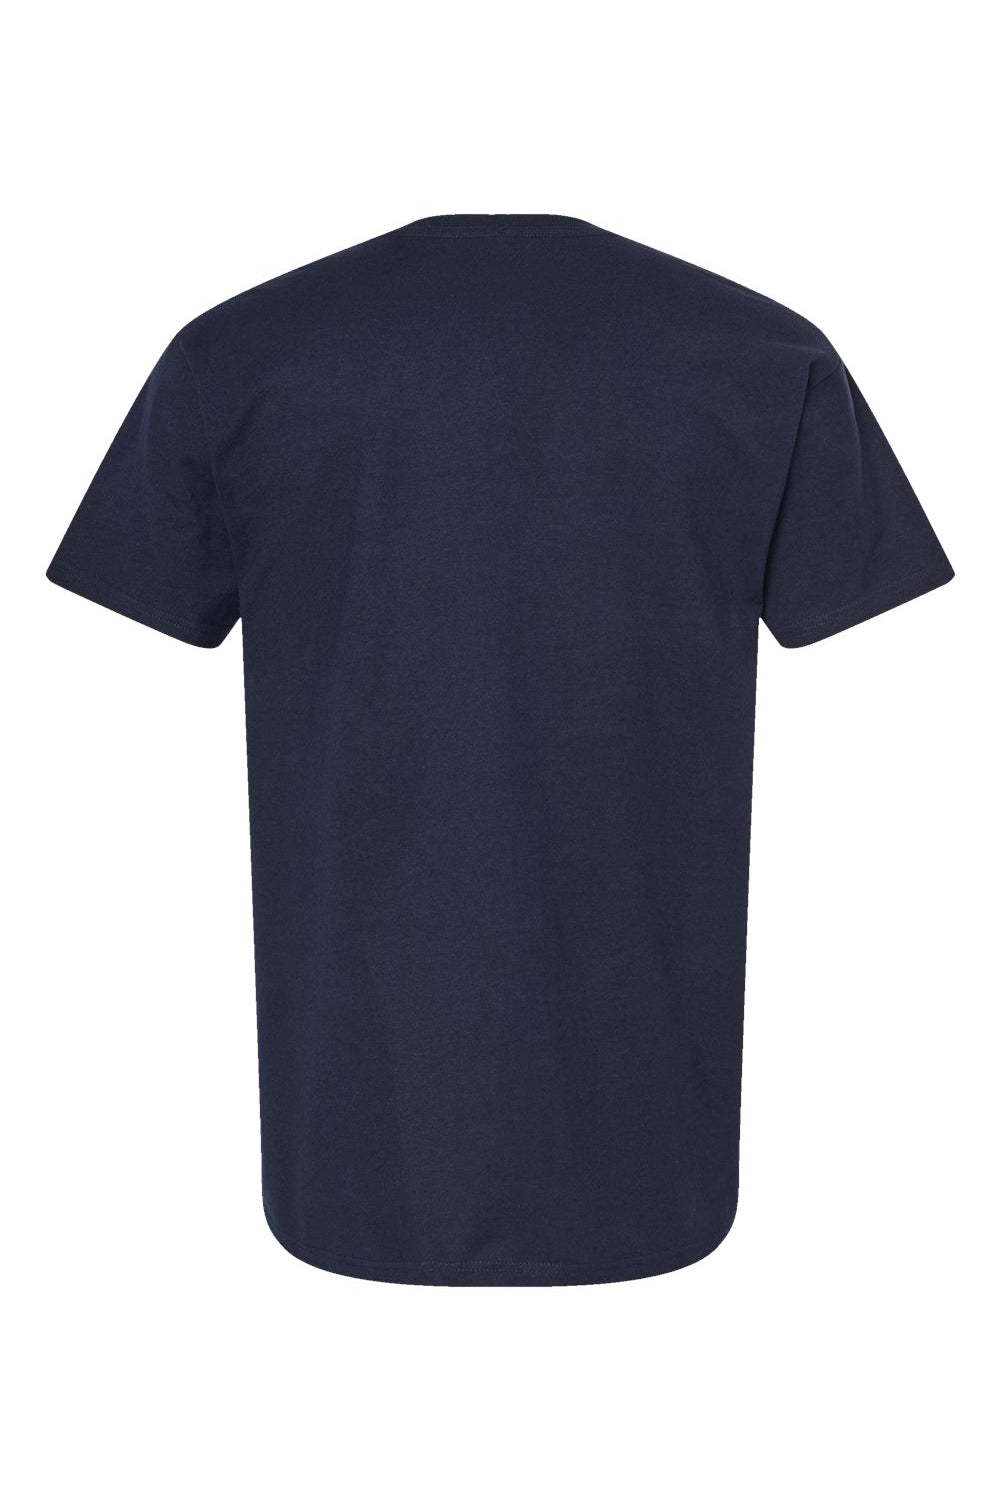 Tultex 290 Mens Jersey Short Sleeve Crewneck T-Shirt Navy Blue Flat Back